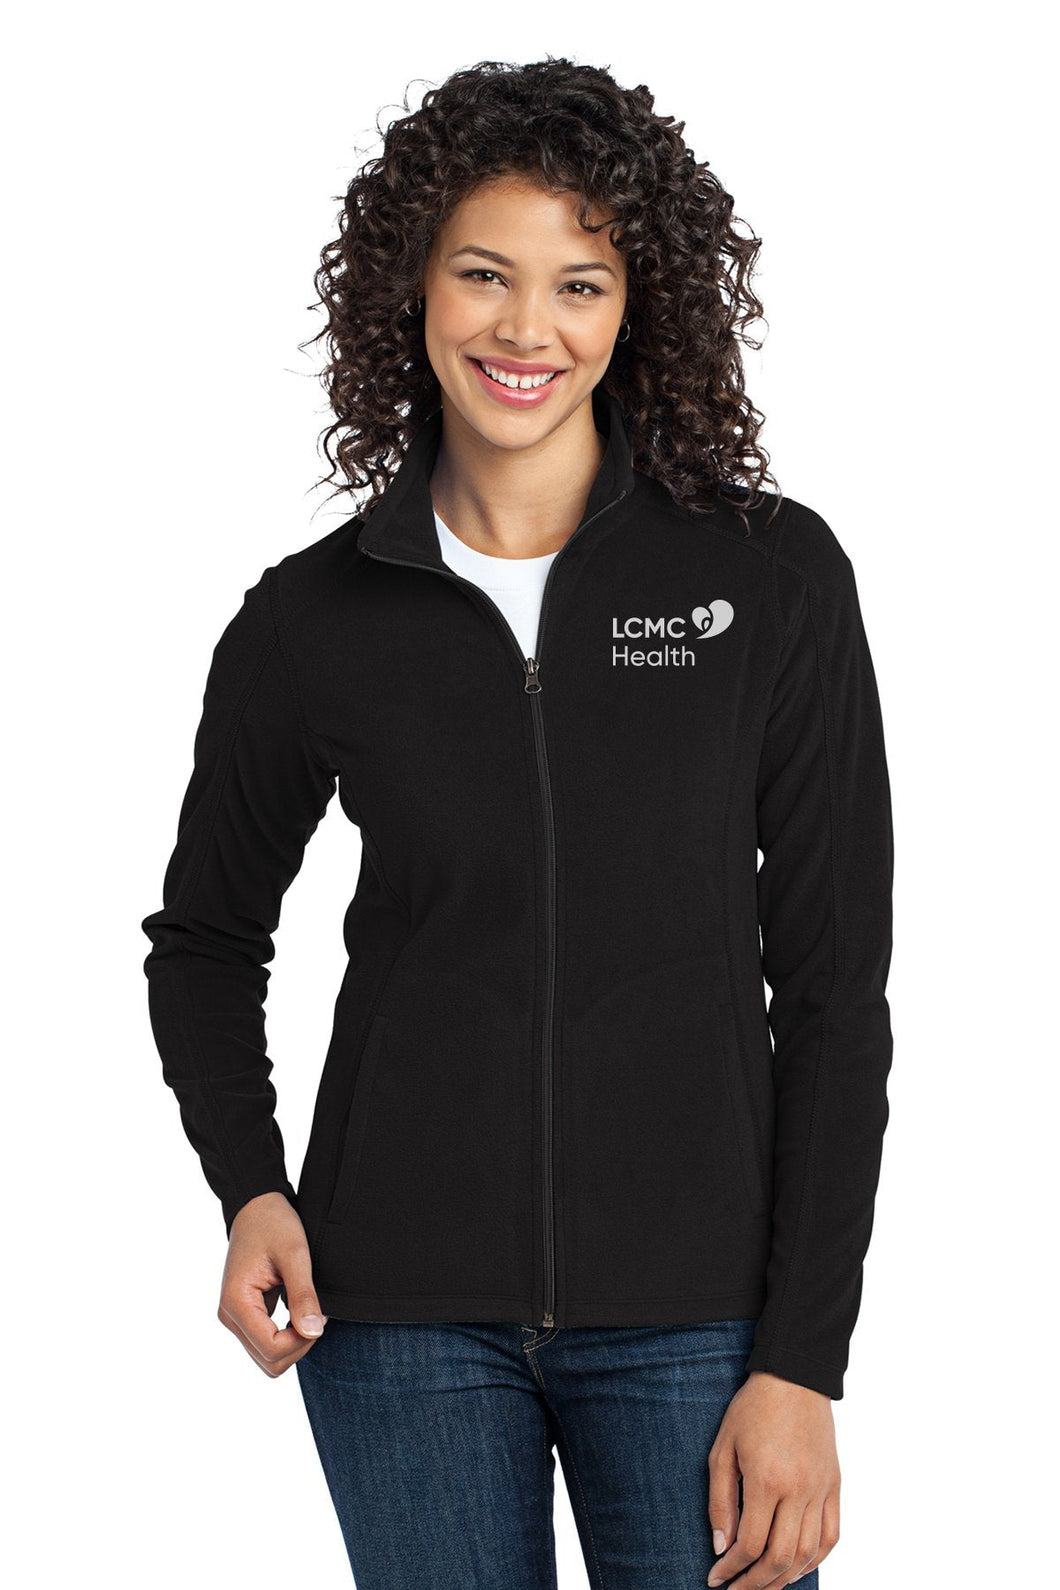 Employee Item - LCMC Health The North Face® Ladies Ridgewall Soft Shell Jacket